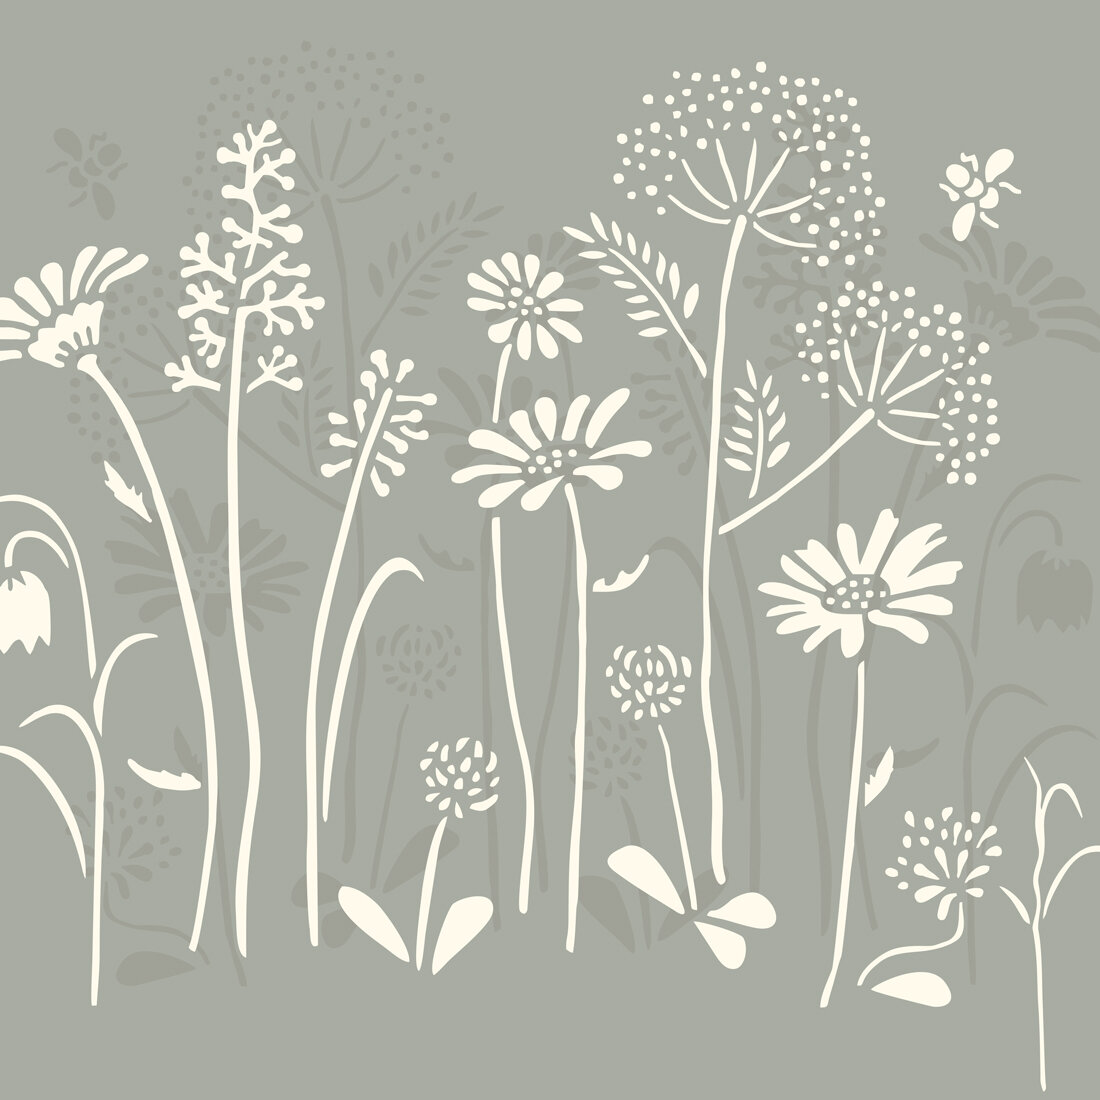 Meadow-Flowers-Old-White-and-Paris-Grey-2 (1).jpg